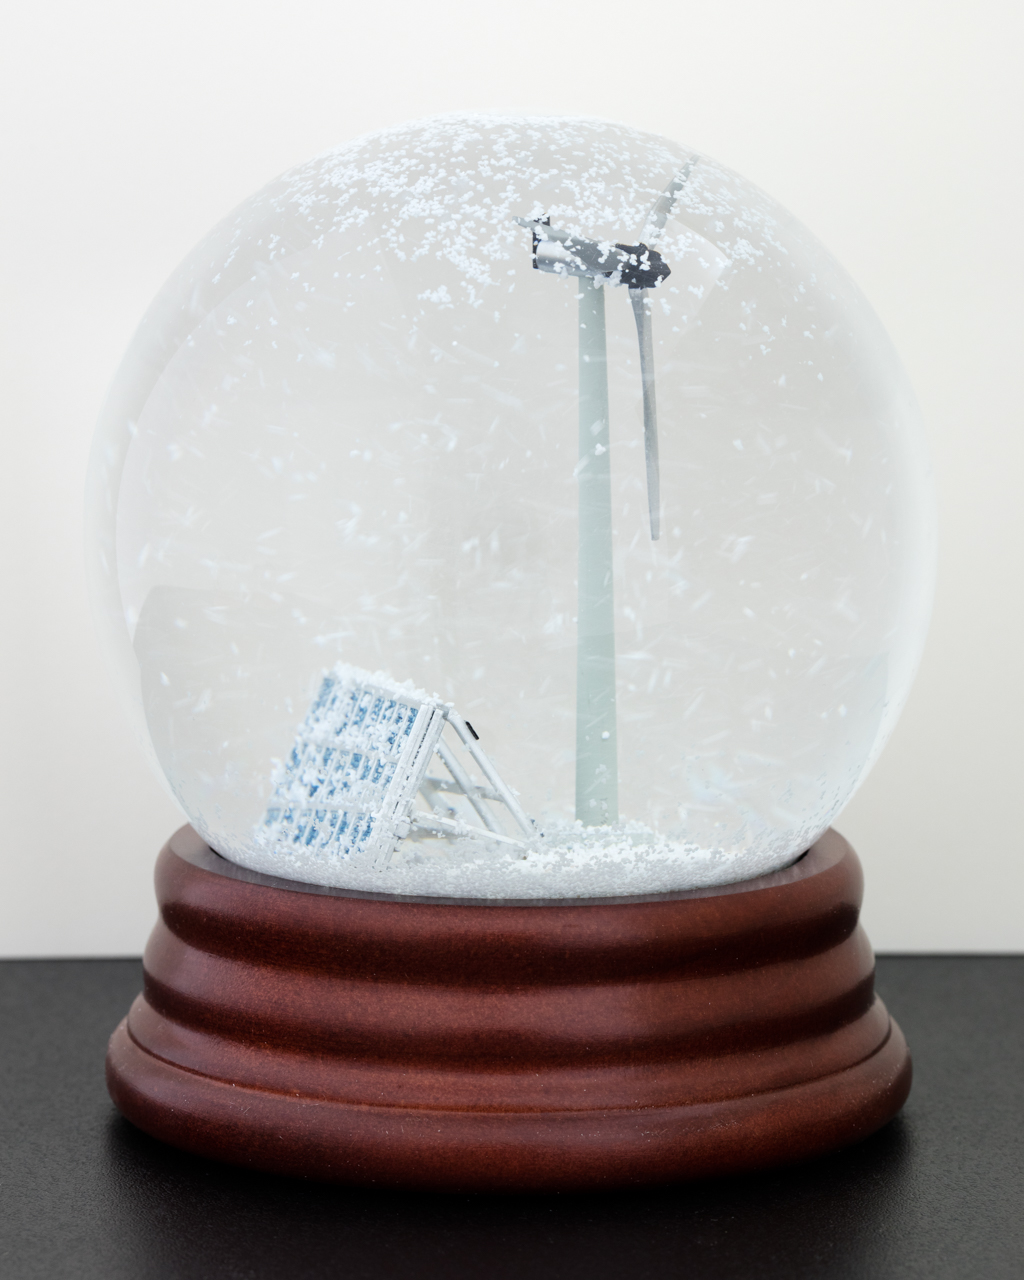 2017, 7.25"H, 6" Dia., Snow Globe, Plastic and 3D-Printed Figures...